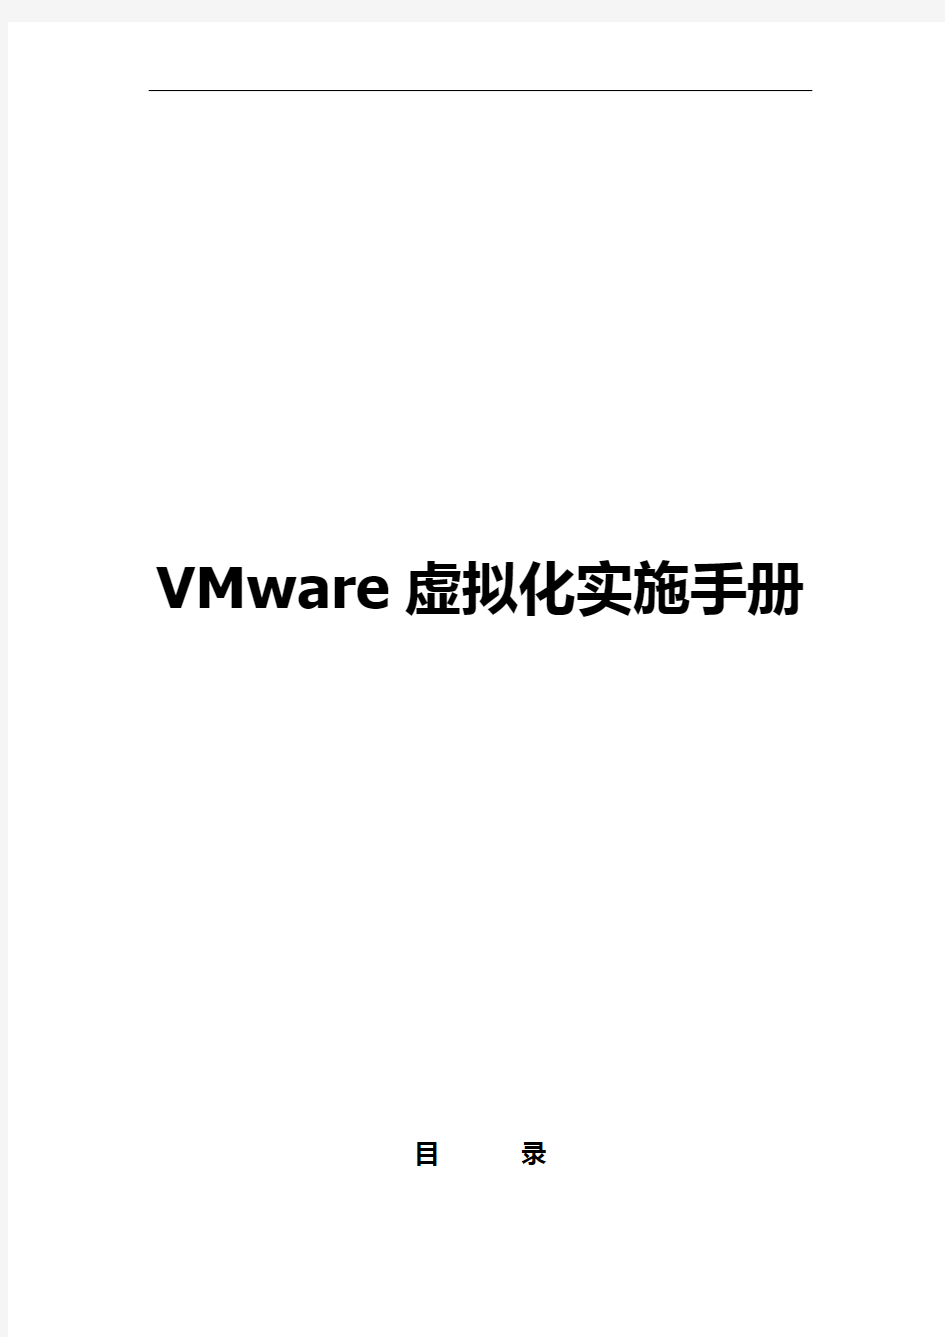 VMware虚拟化实施手册范本